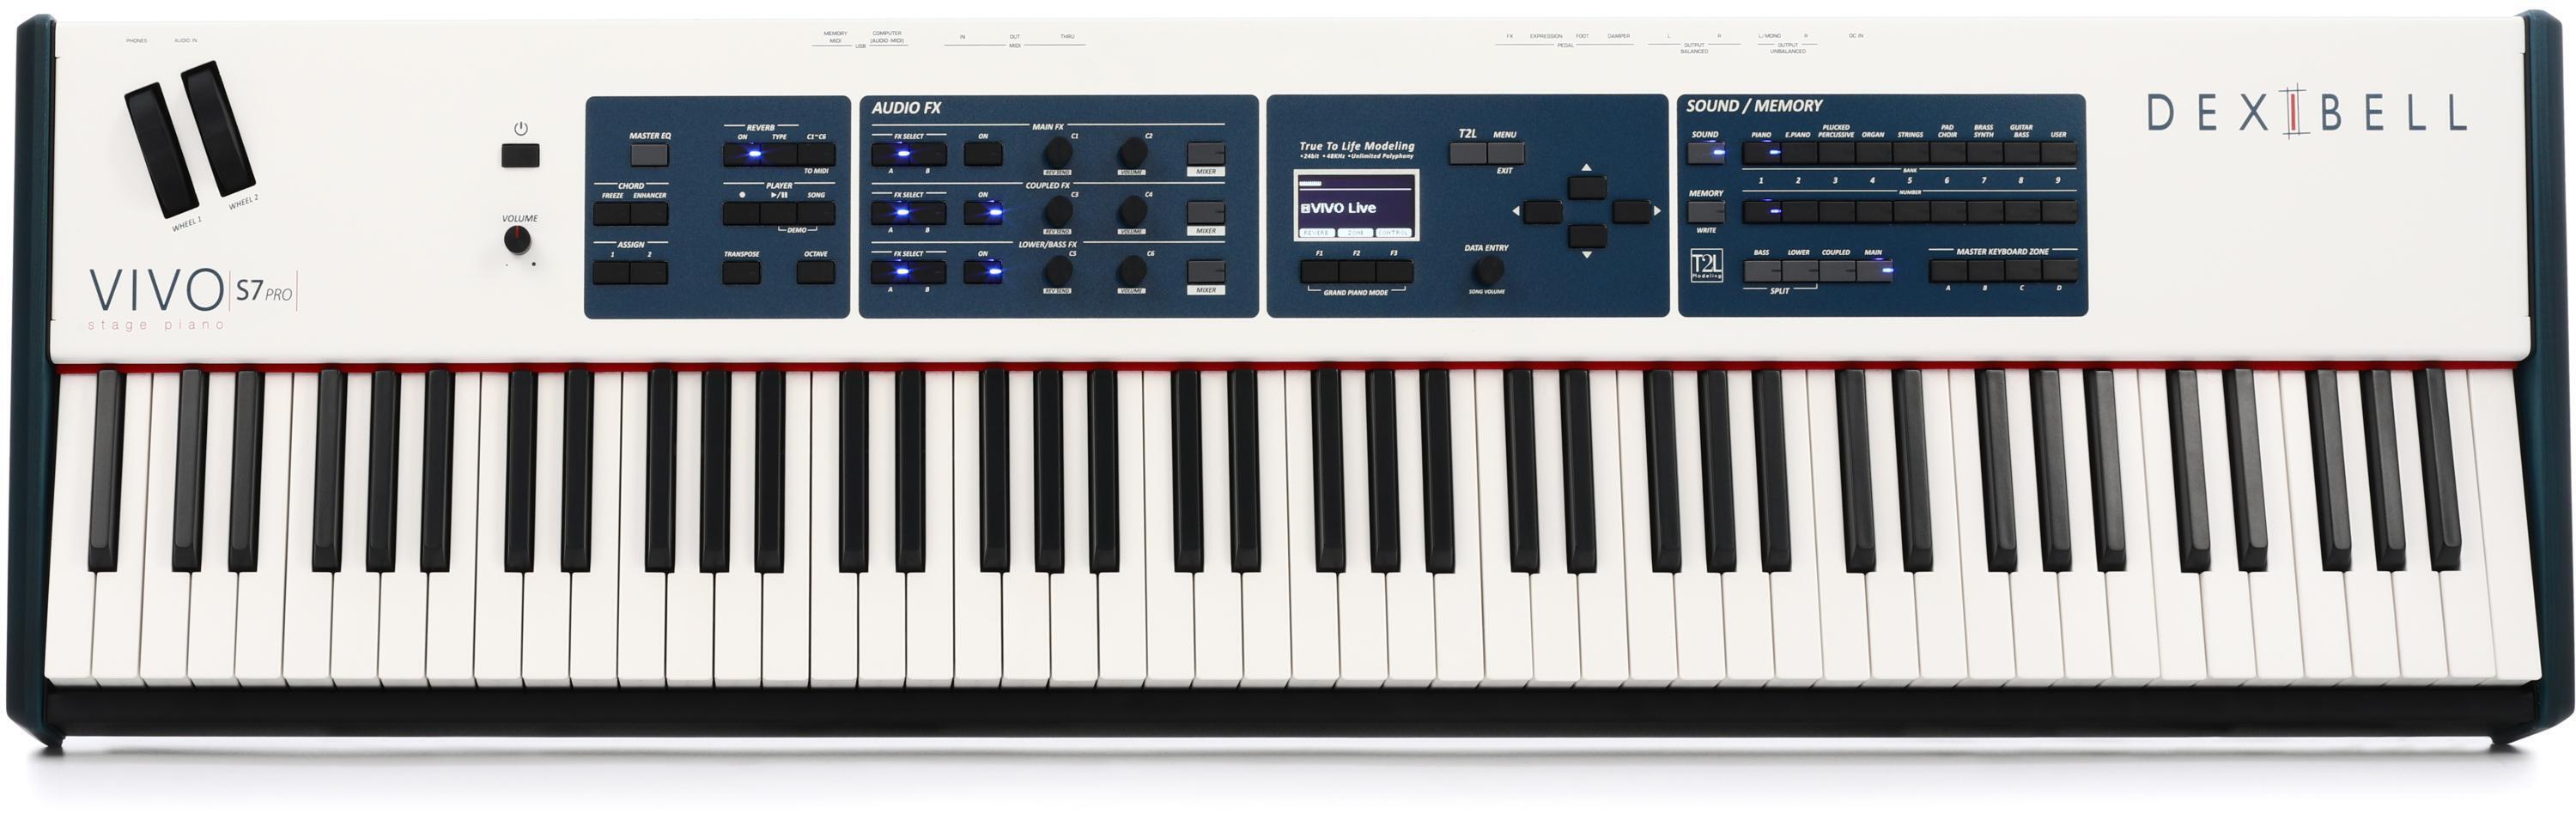 Dexibell VIVO S7 Pro 88-key Digital Piano